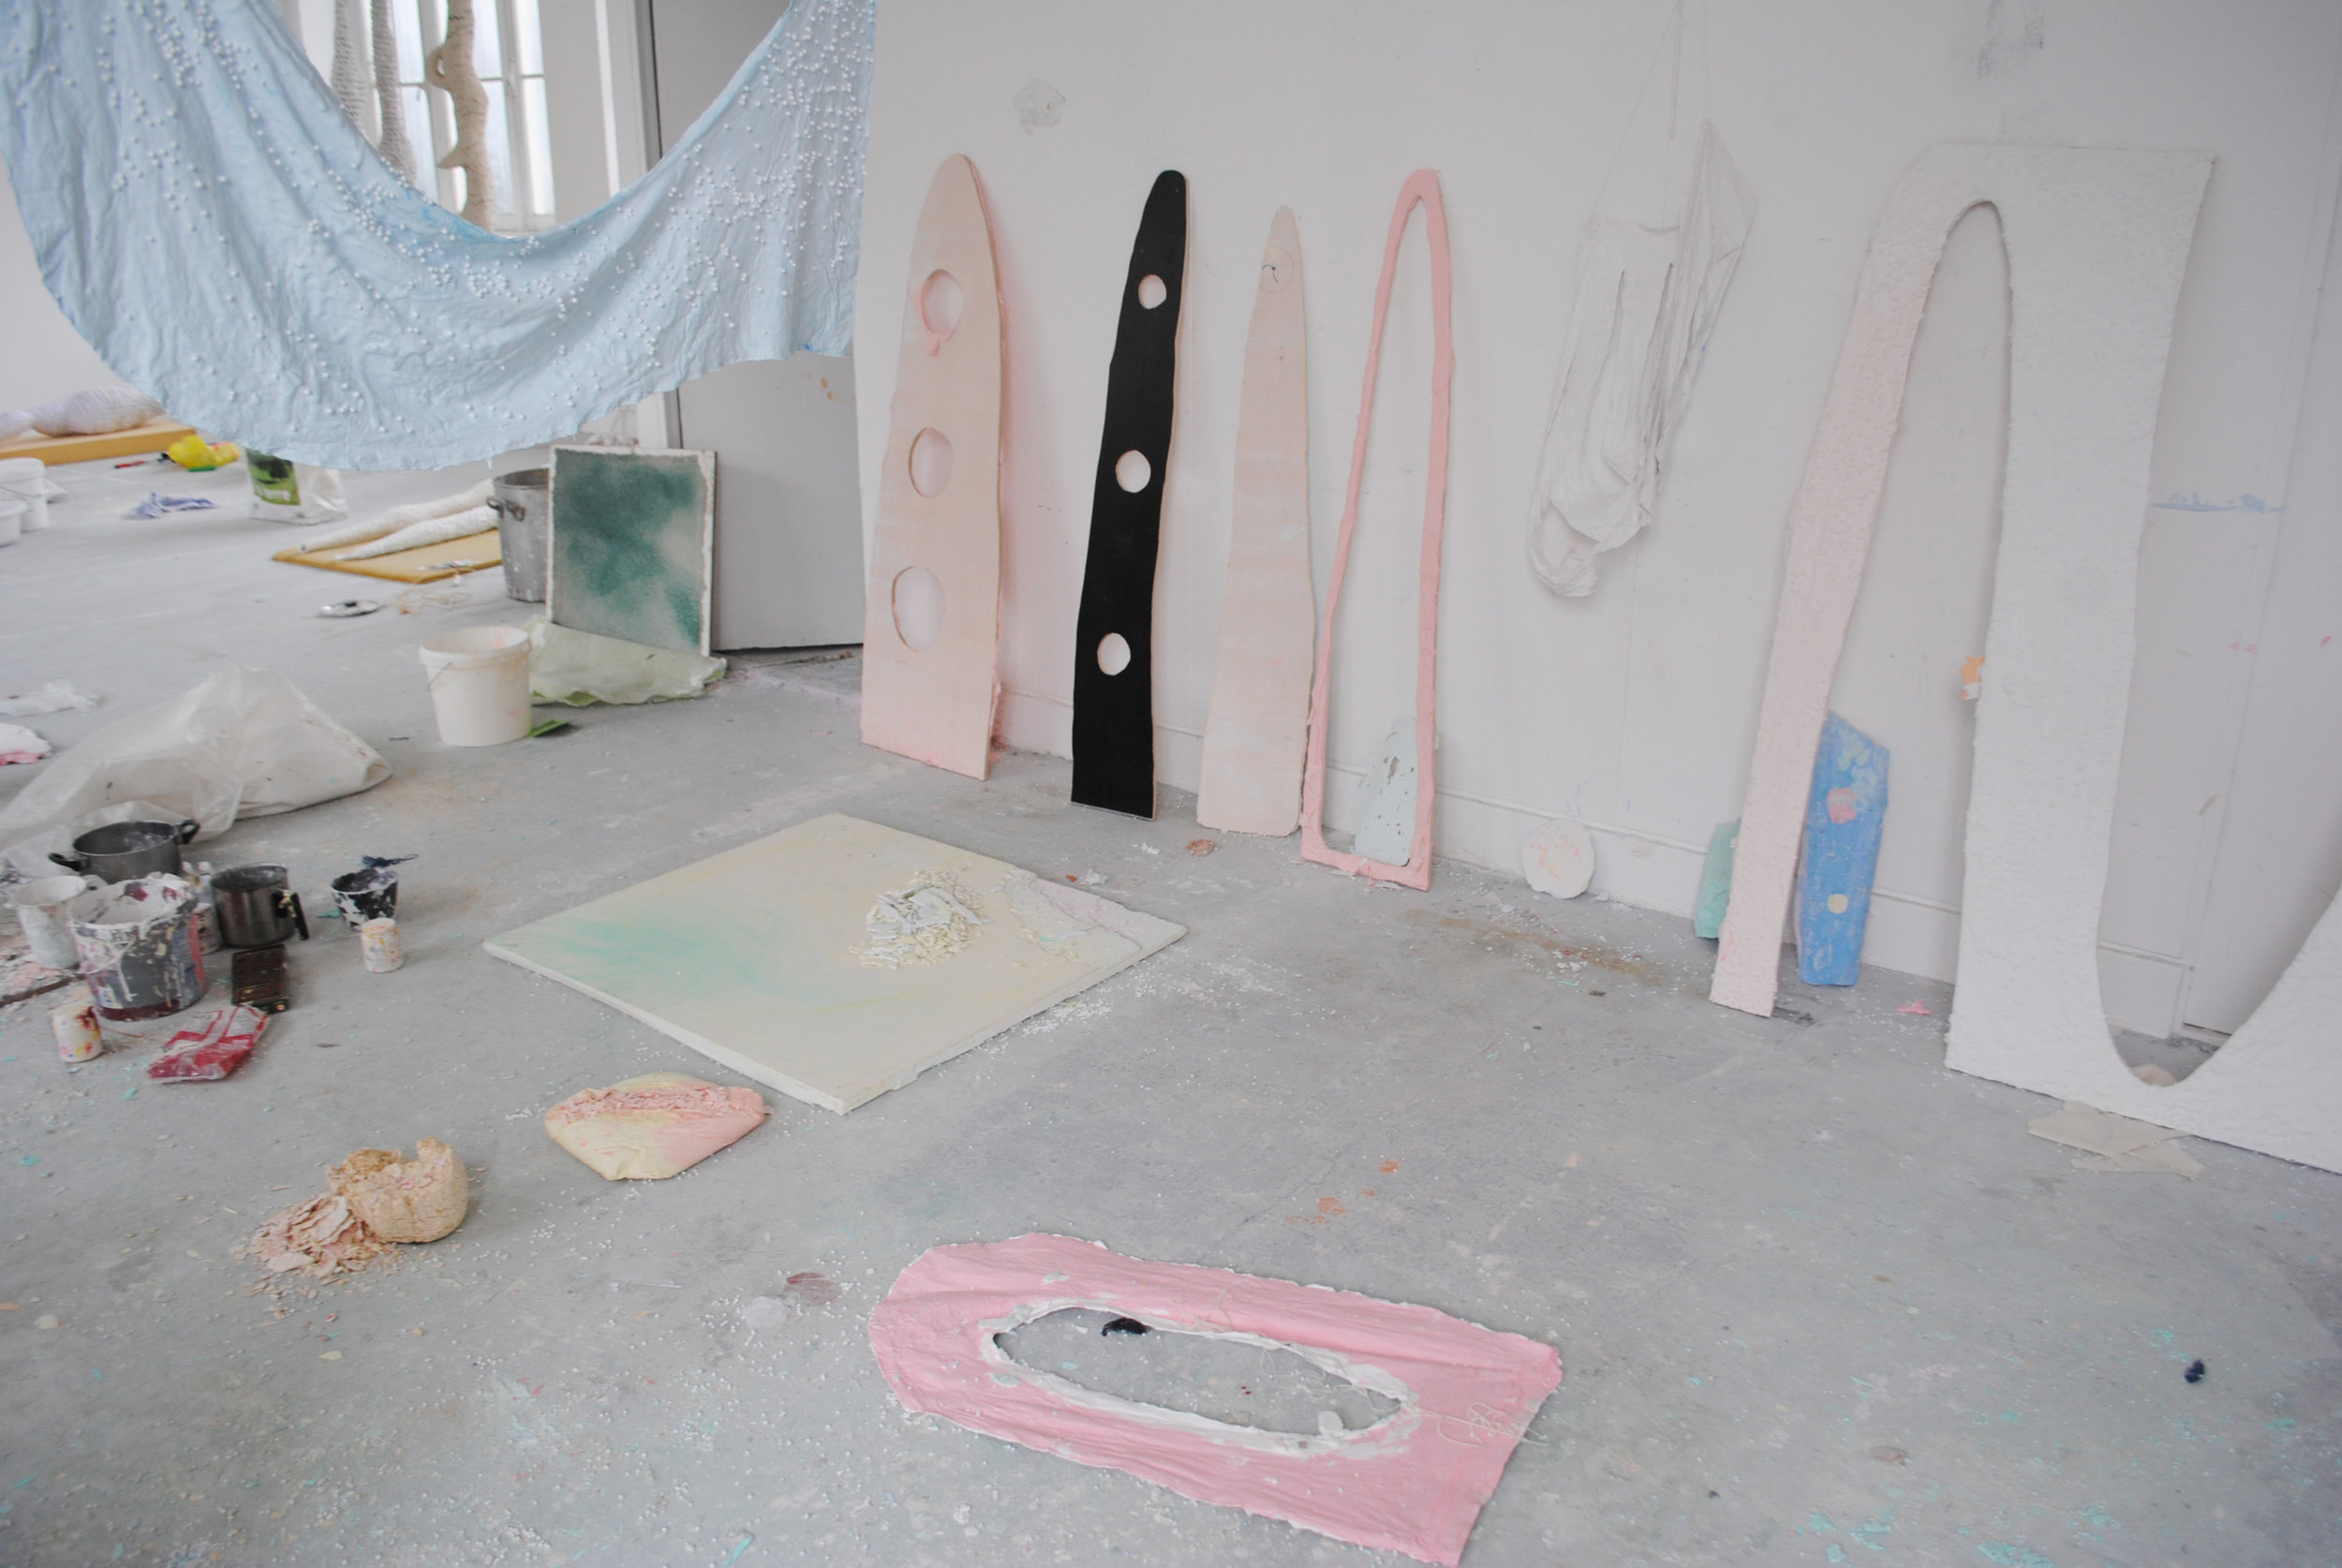 Studio view 2014: Textiles, wood, plaster, pigments, chalks, wax, plastic, soap, polystyrene, 300 x 200 cm, Maastricht 2014